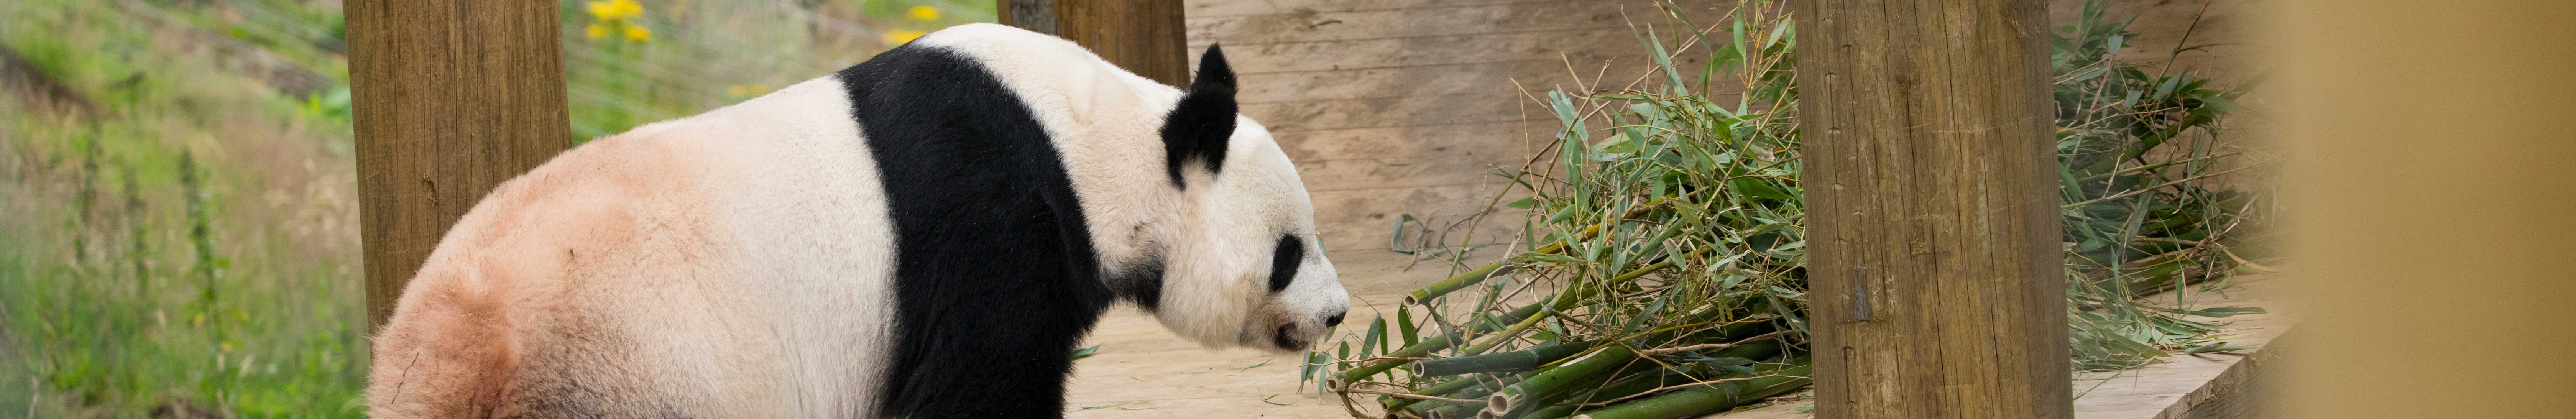 panda smelling bamboo